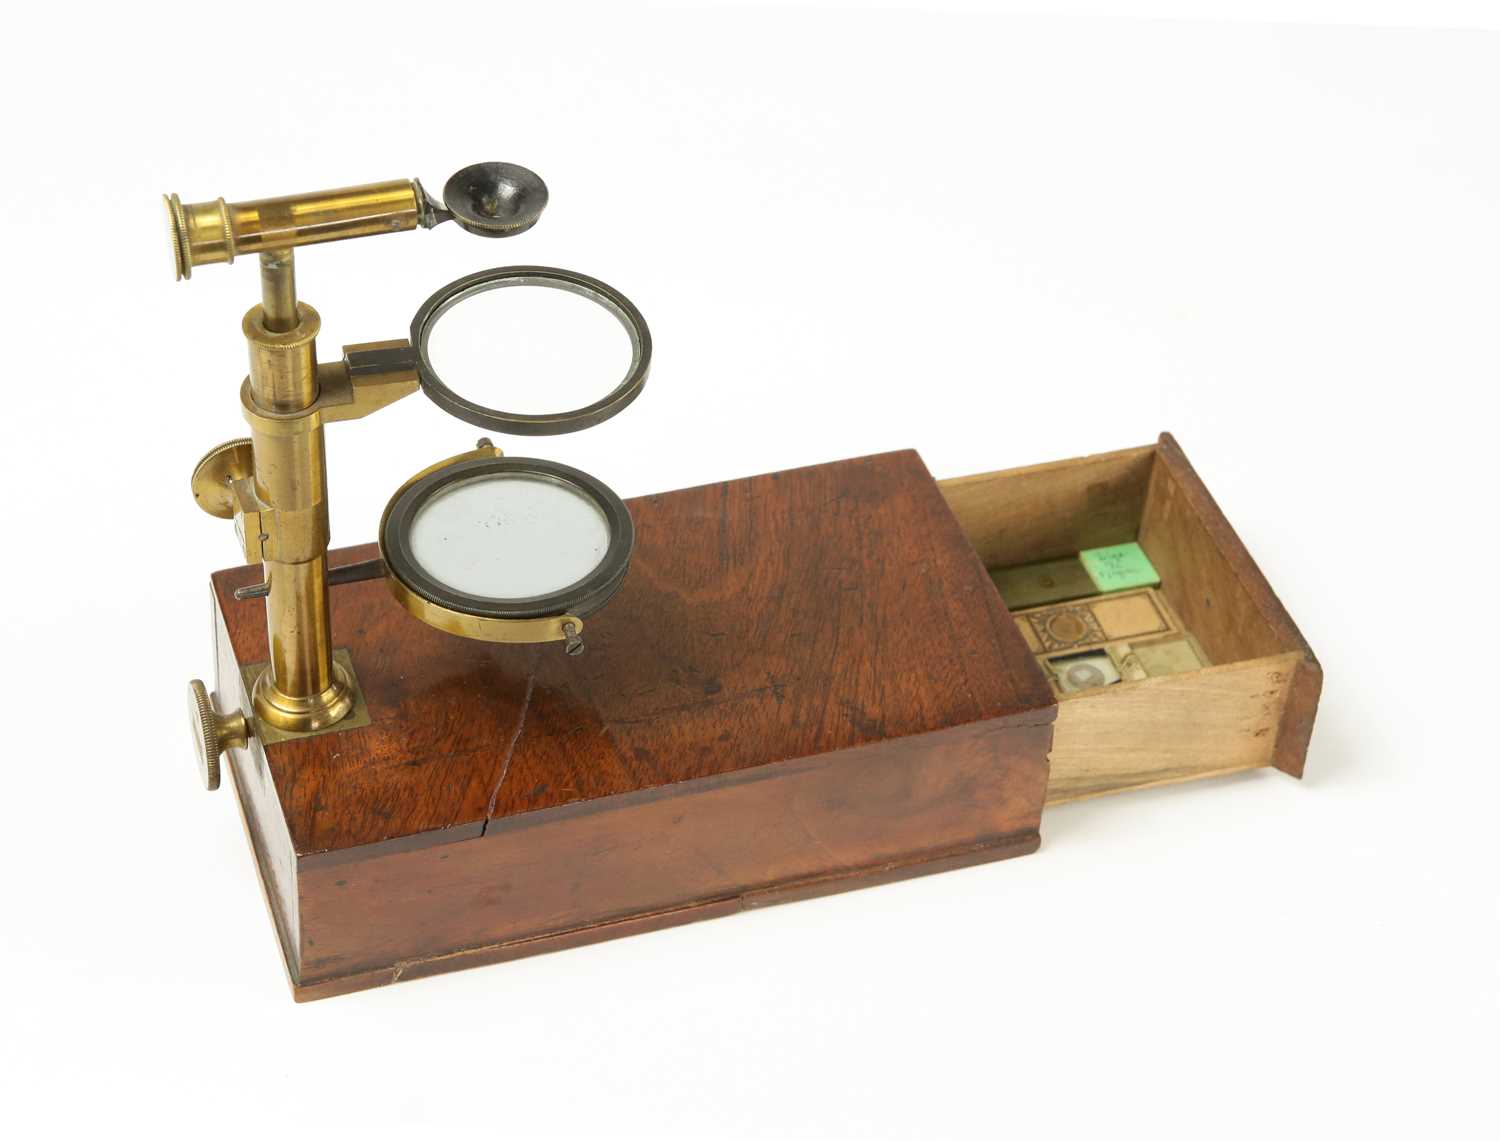 Lot 91 - Raspail's Simple Chemical Microscope, By Louis-Joseph Deleuil (1795-1862)